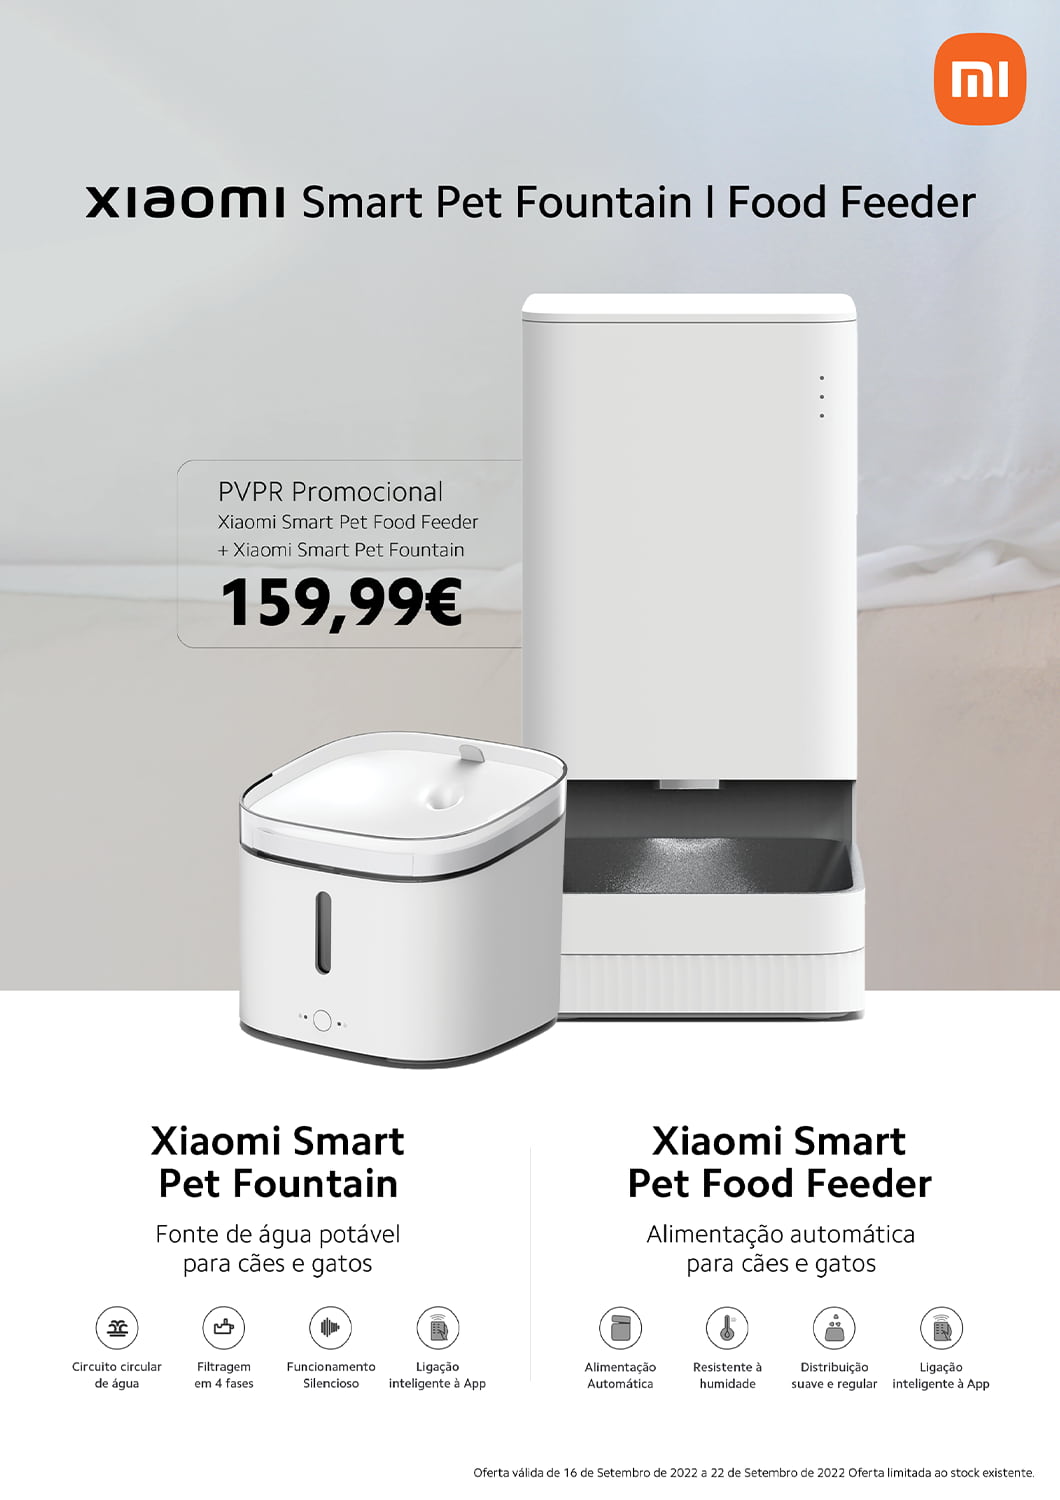 Xiaomi Smart Pet Food Feeder 2 Xiaomi, Xiaomi Smart Pet Food Feeder, Xiaomi Smart Pet Fountain